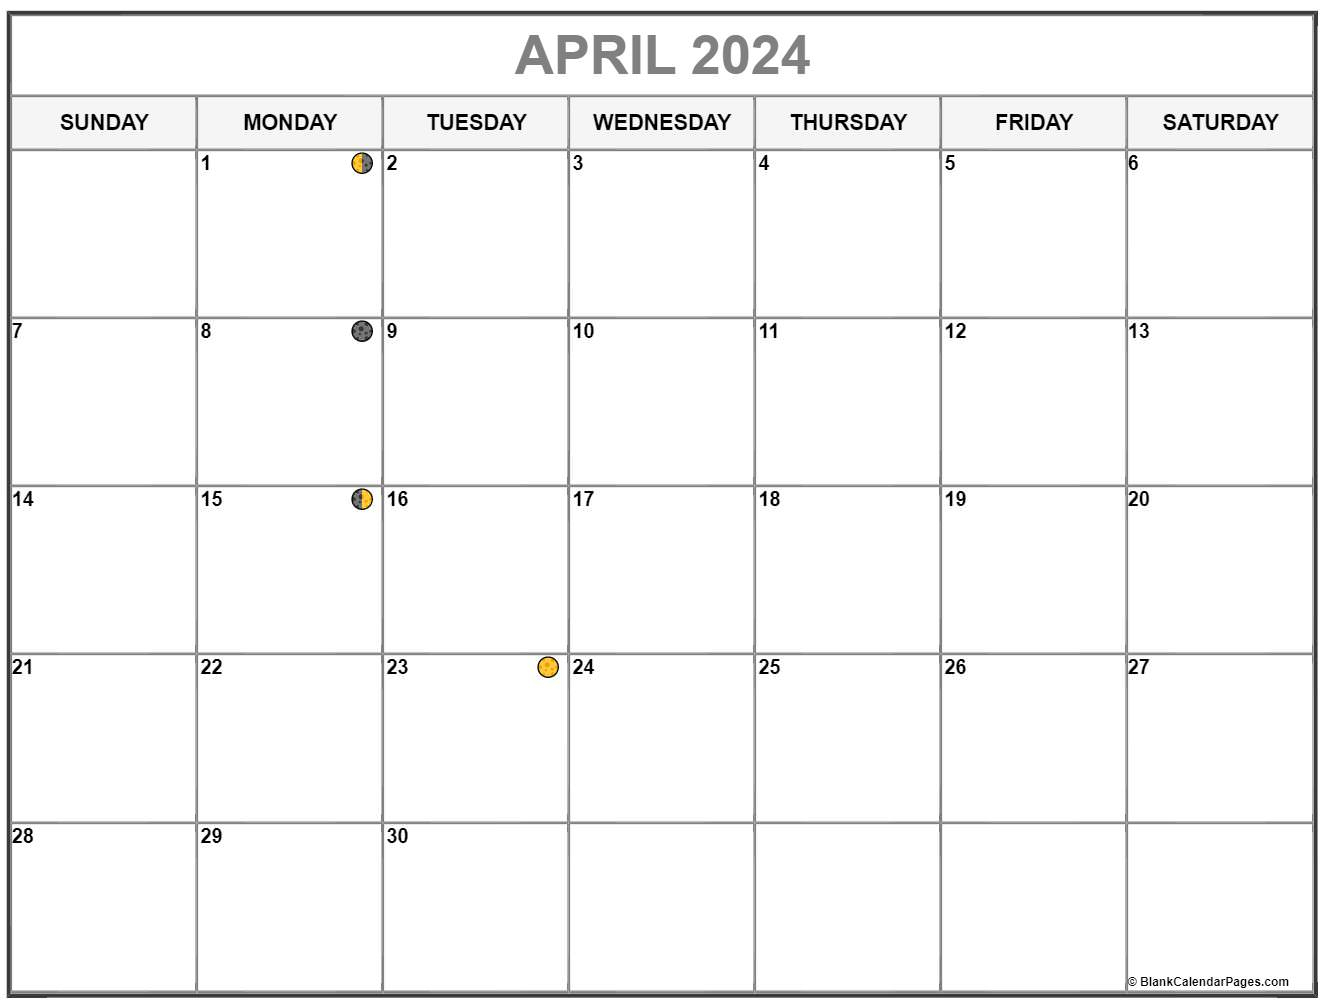 April 2024 Lunar Calendar | Moon Phase Calendar pertaining to April Moon Calendar 2024